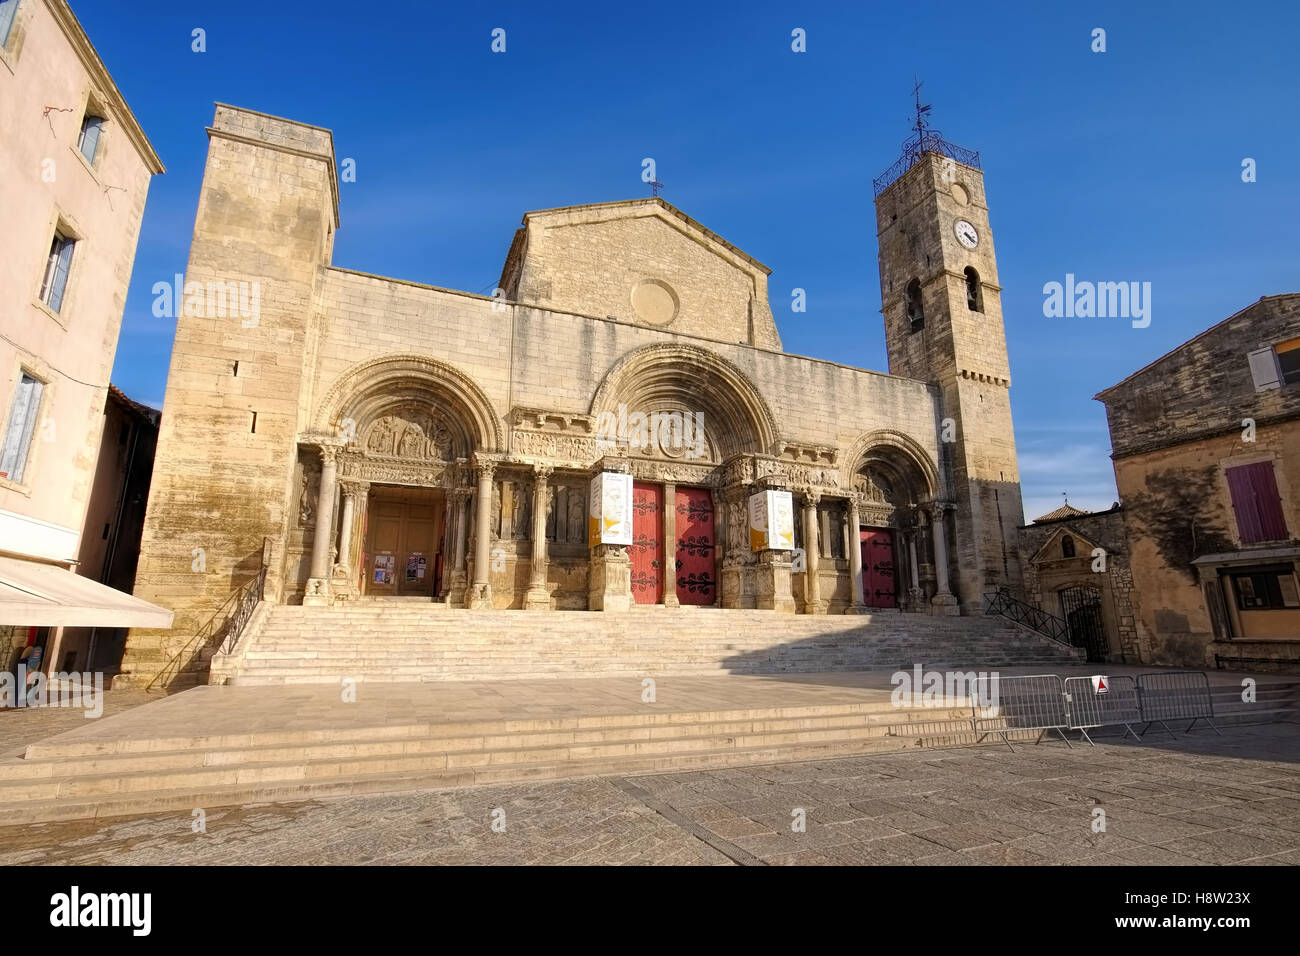 Saint-Gilles Abteikirche, Provenza - Abbazia di Saint-Gilles, Provenza in Francia Foto Stock